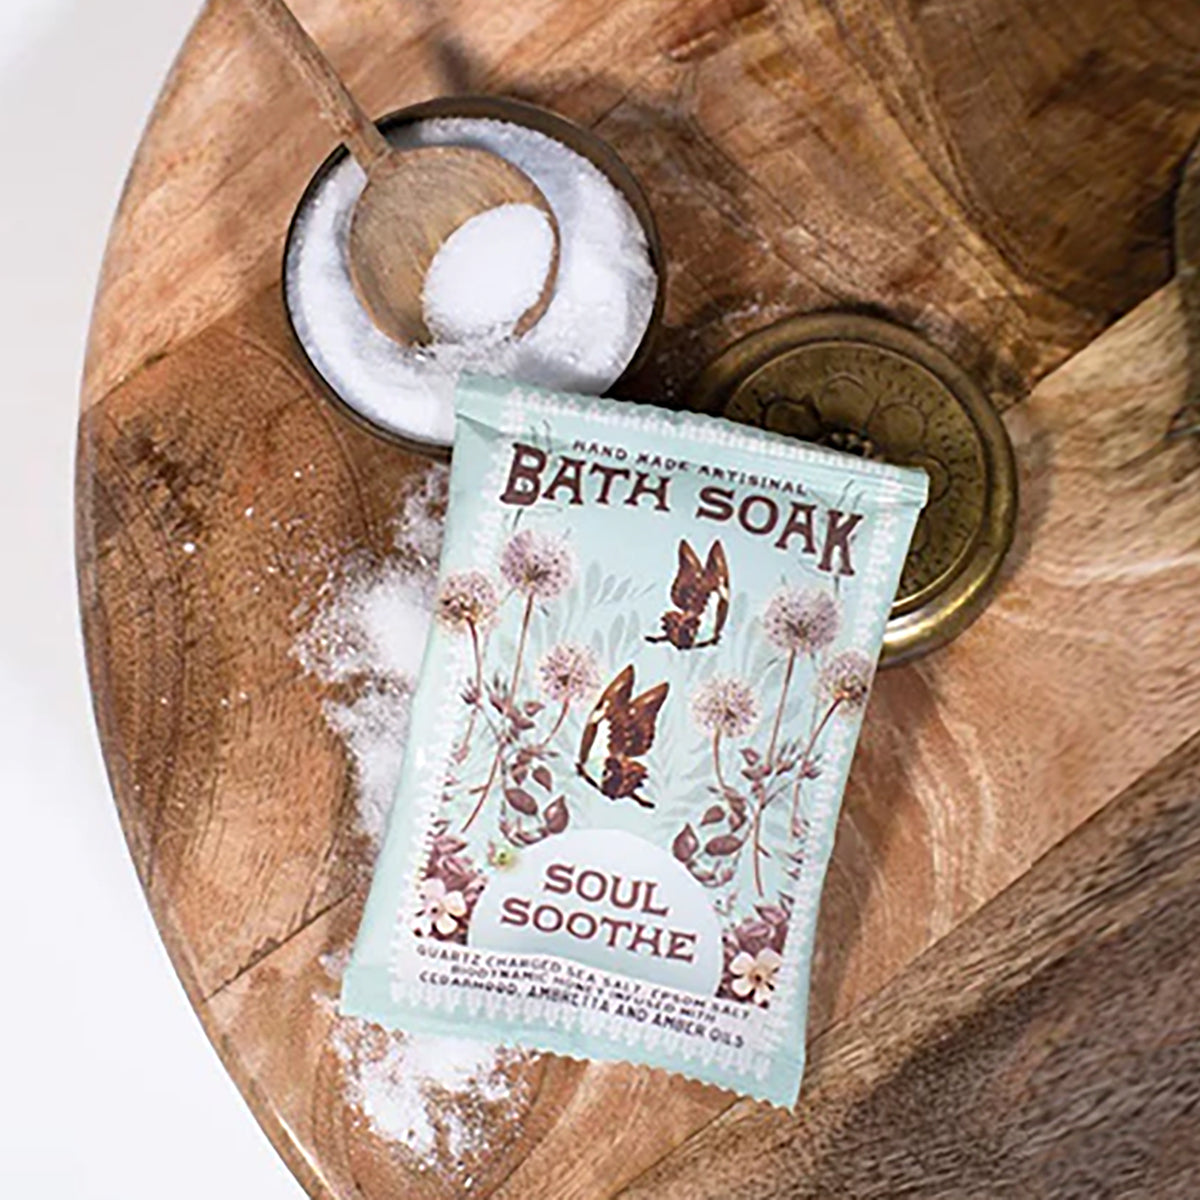 Soul Soothe Bath Soak - honey, cedarwood, ambretta and amber oil